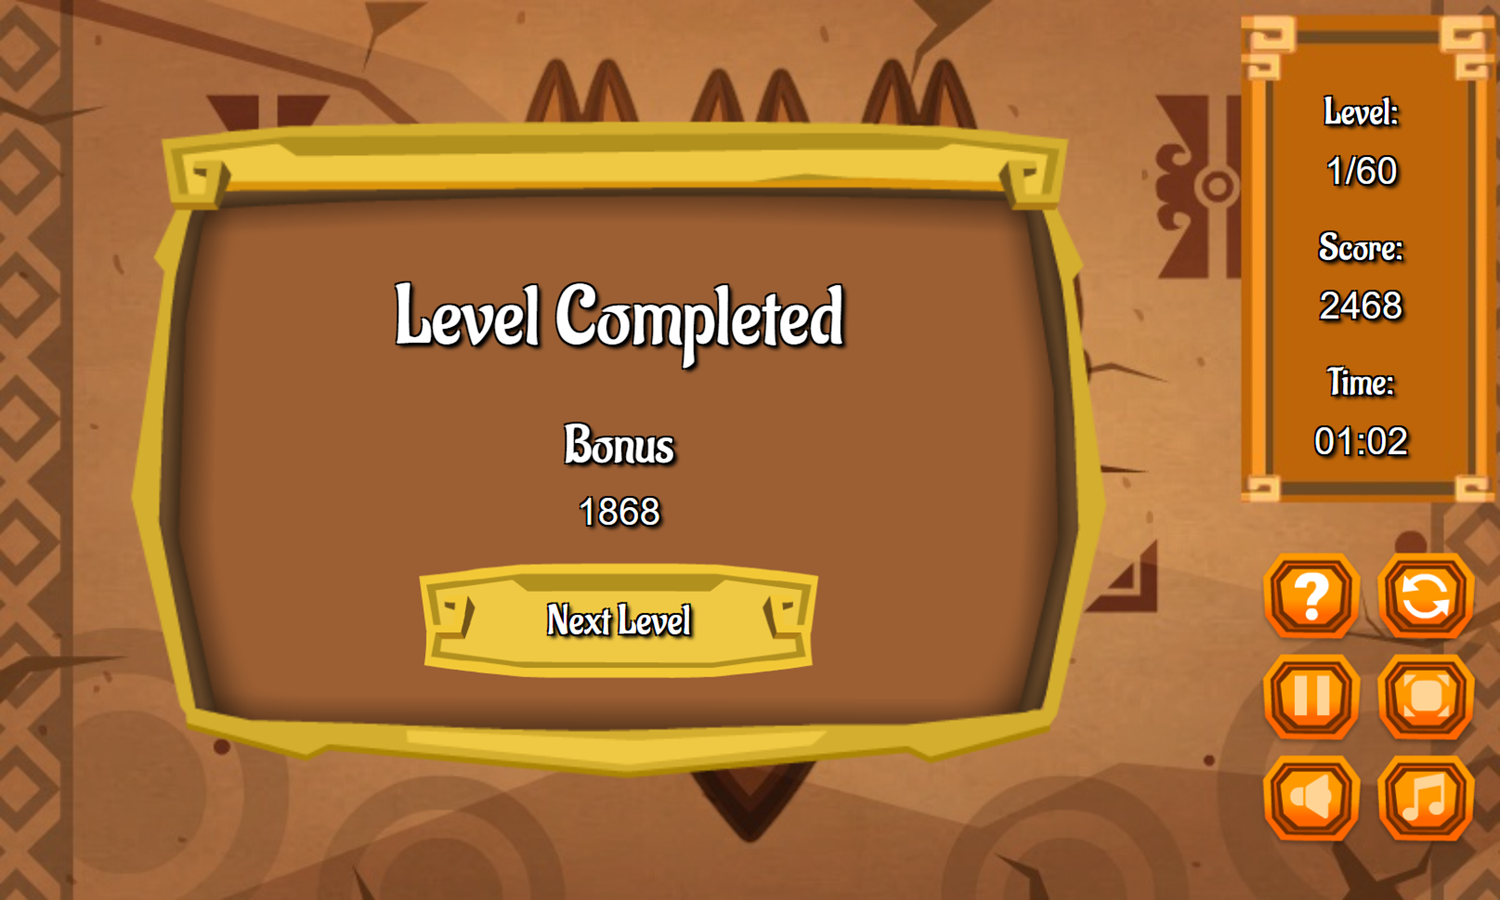 Mah-Domino Game Level Completed Screenshot.